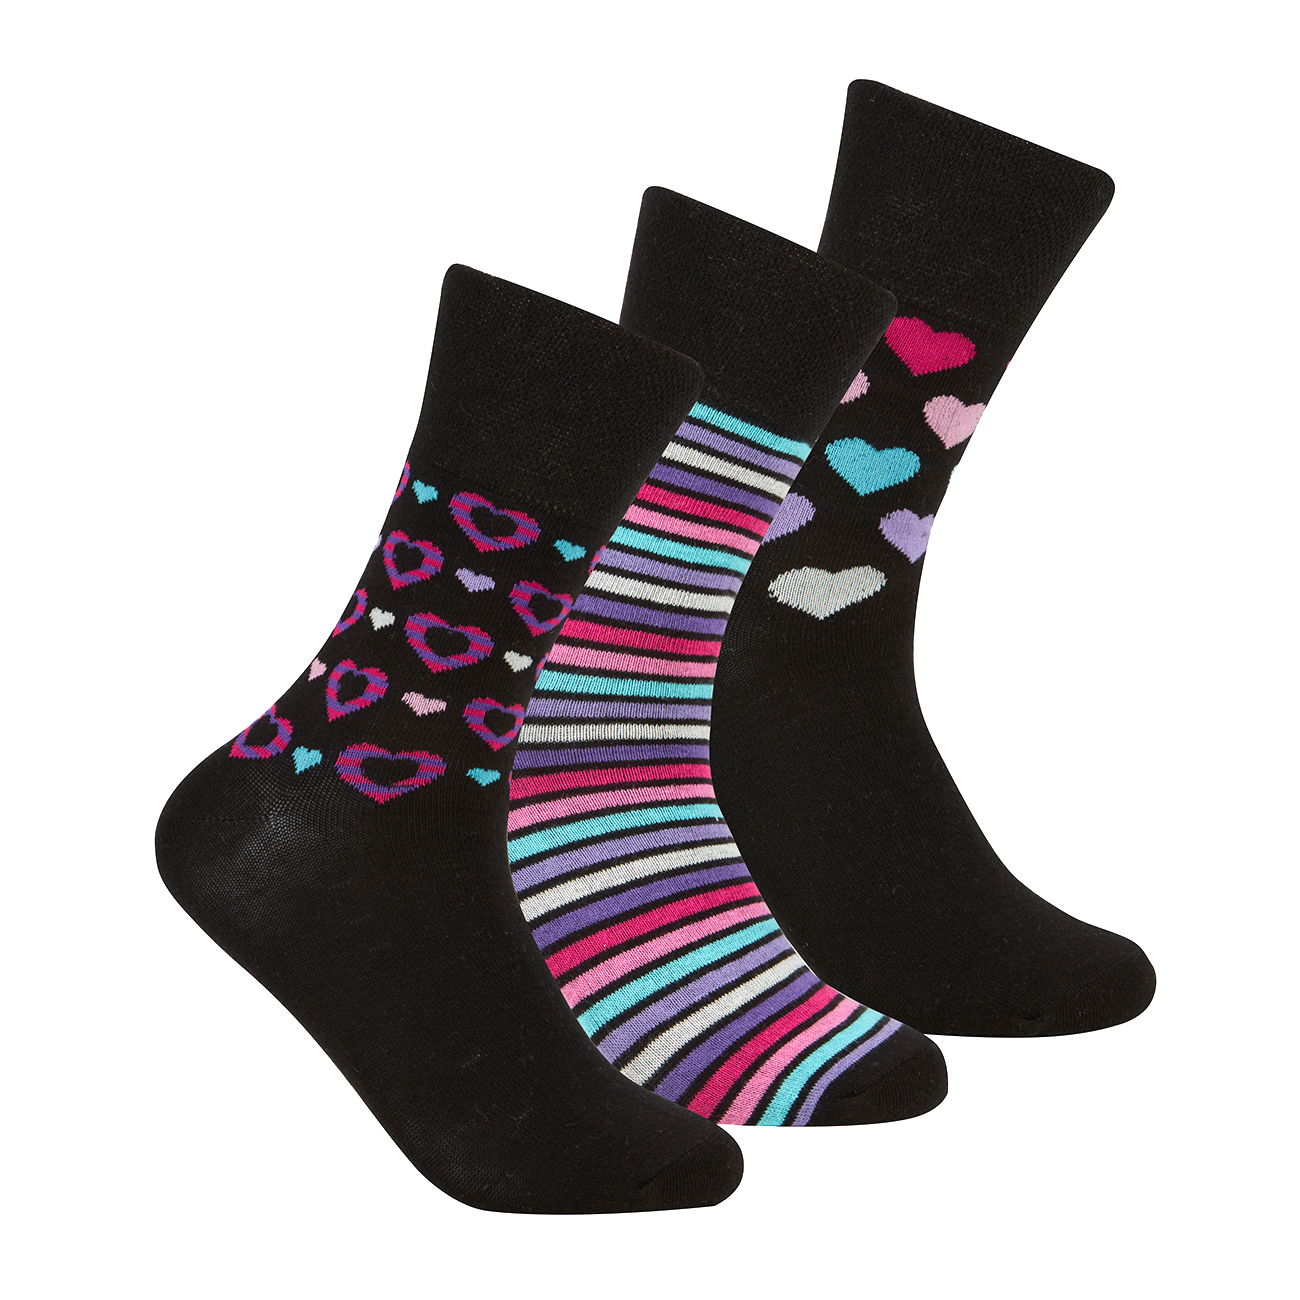 6-12 Pairs Ladies Womens Non Elastic Loose Top Socks Grip Diabetic ...